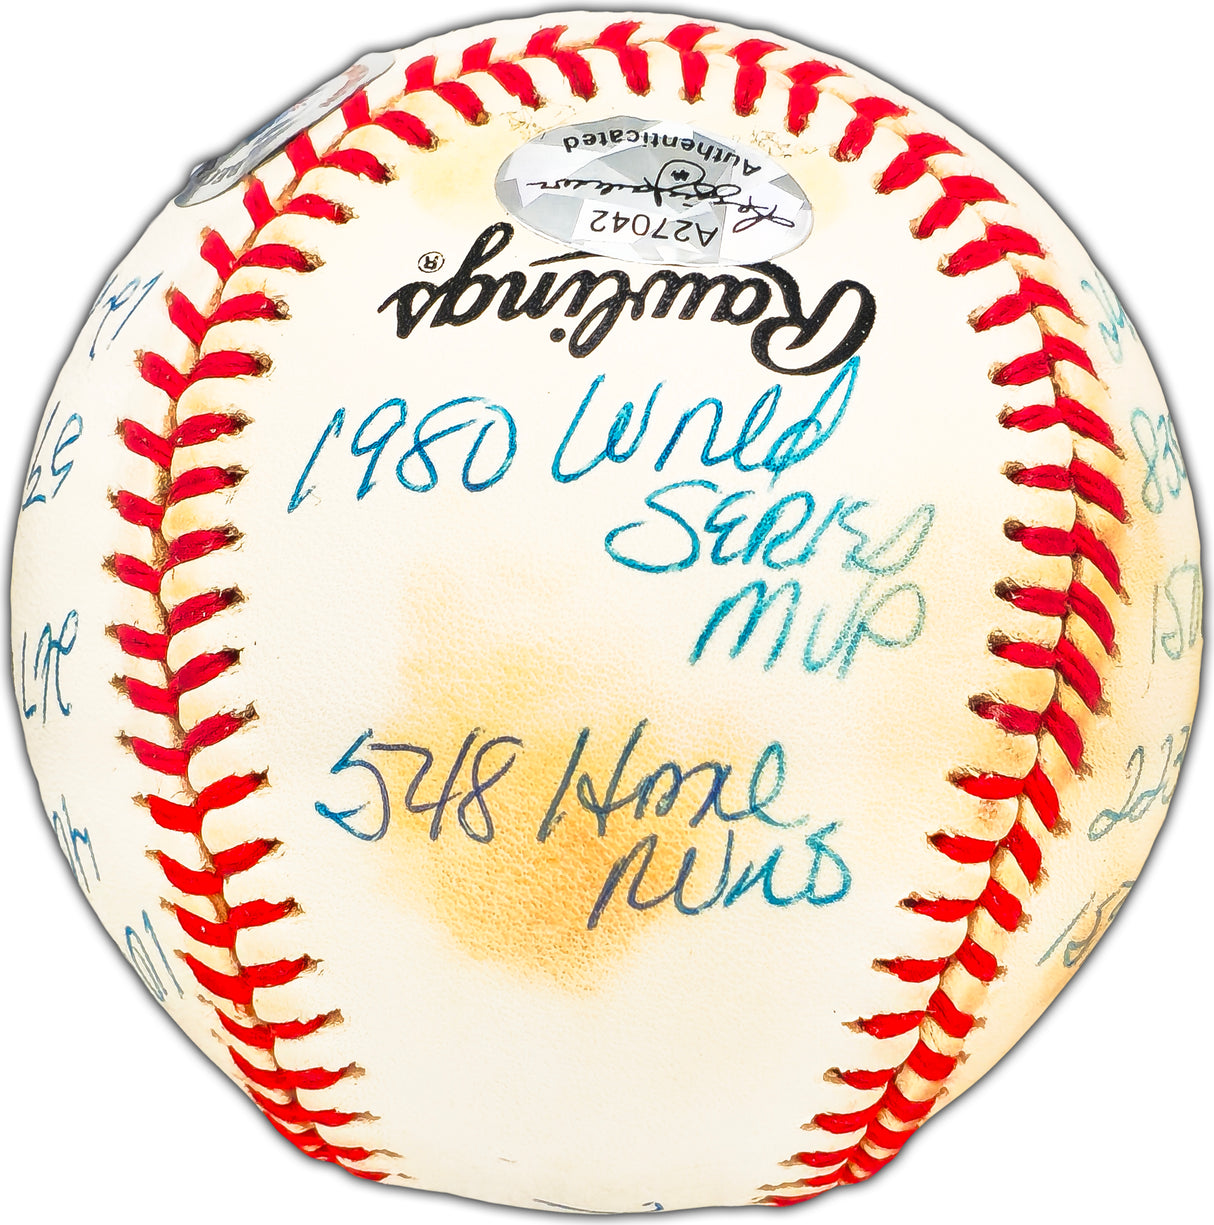 Mike Schmidt Autographed Official NL Statball Baseball Philadelphia Phillies With 16 Stats #447/1000 Beckett BAS #BK44617